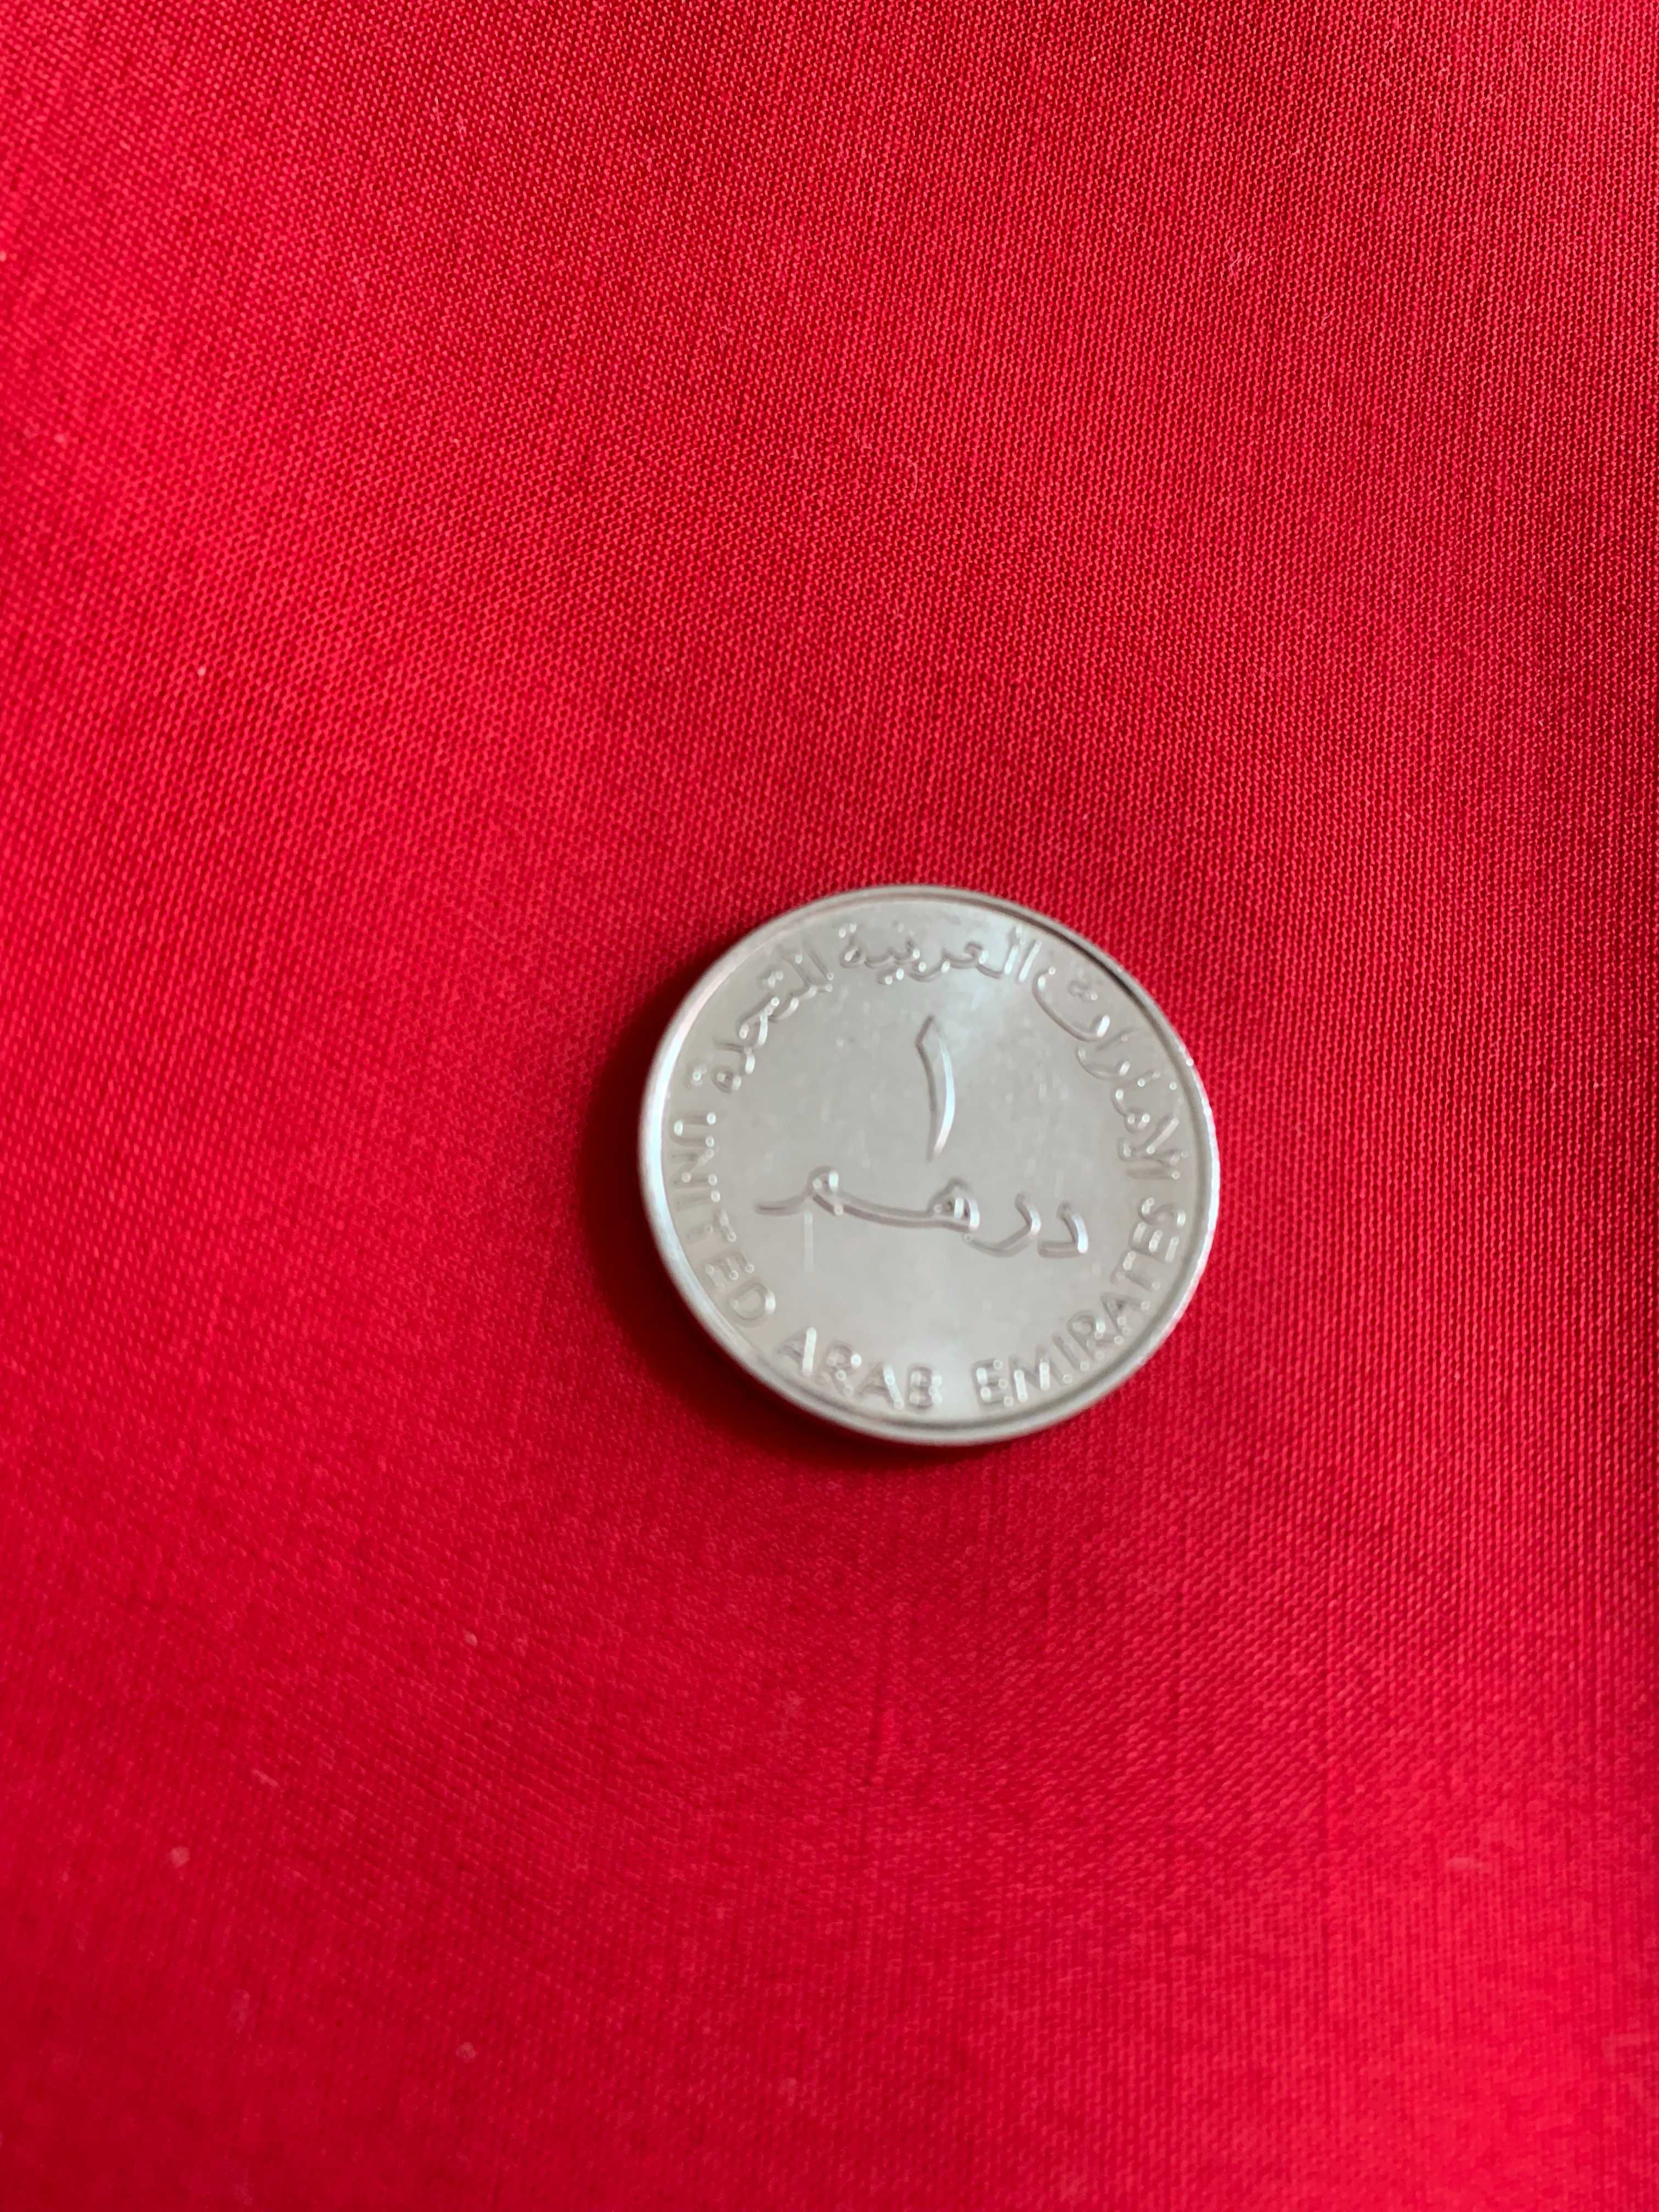 Монета ОАЭ 1 дирхам